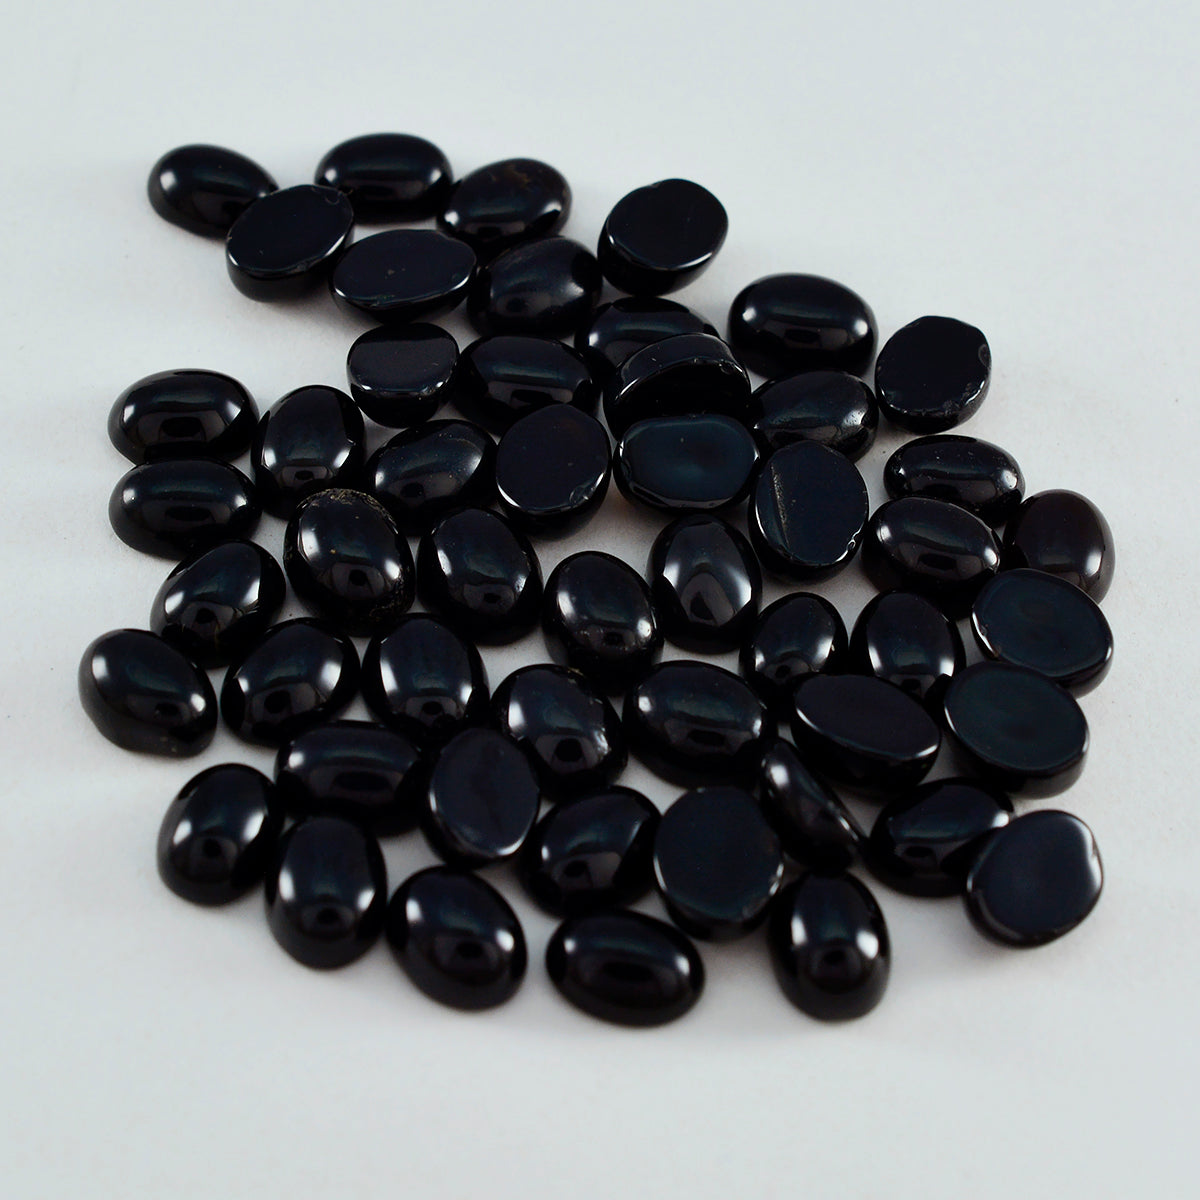 Riyogems 1PC Black Onyx Cabochon 3x5 mm ovale vorm knappe kwaliteit edelsteen